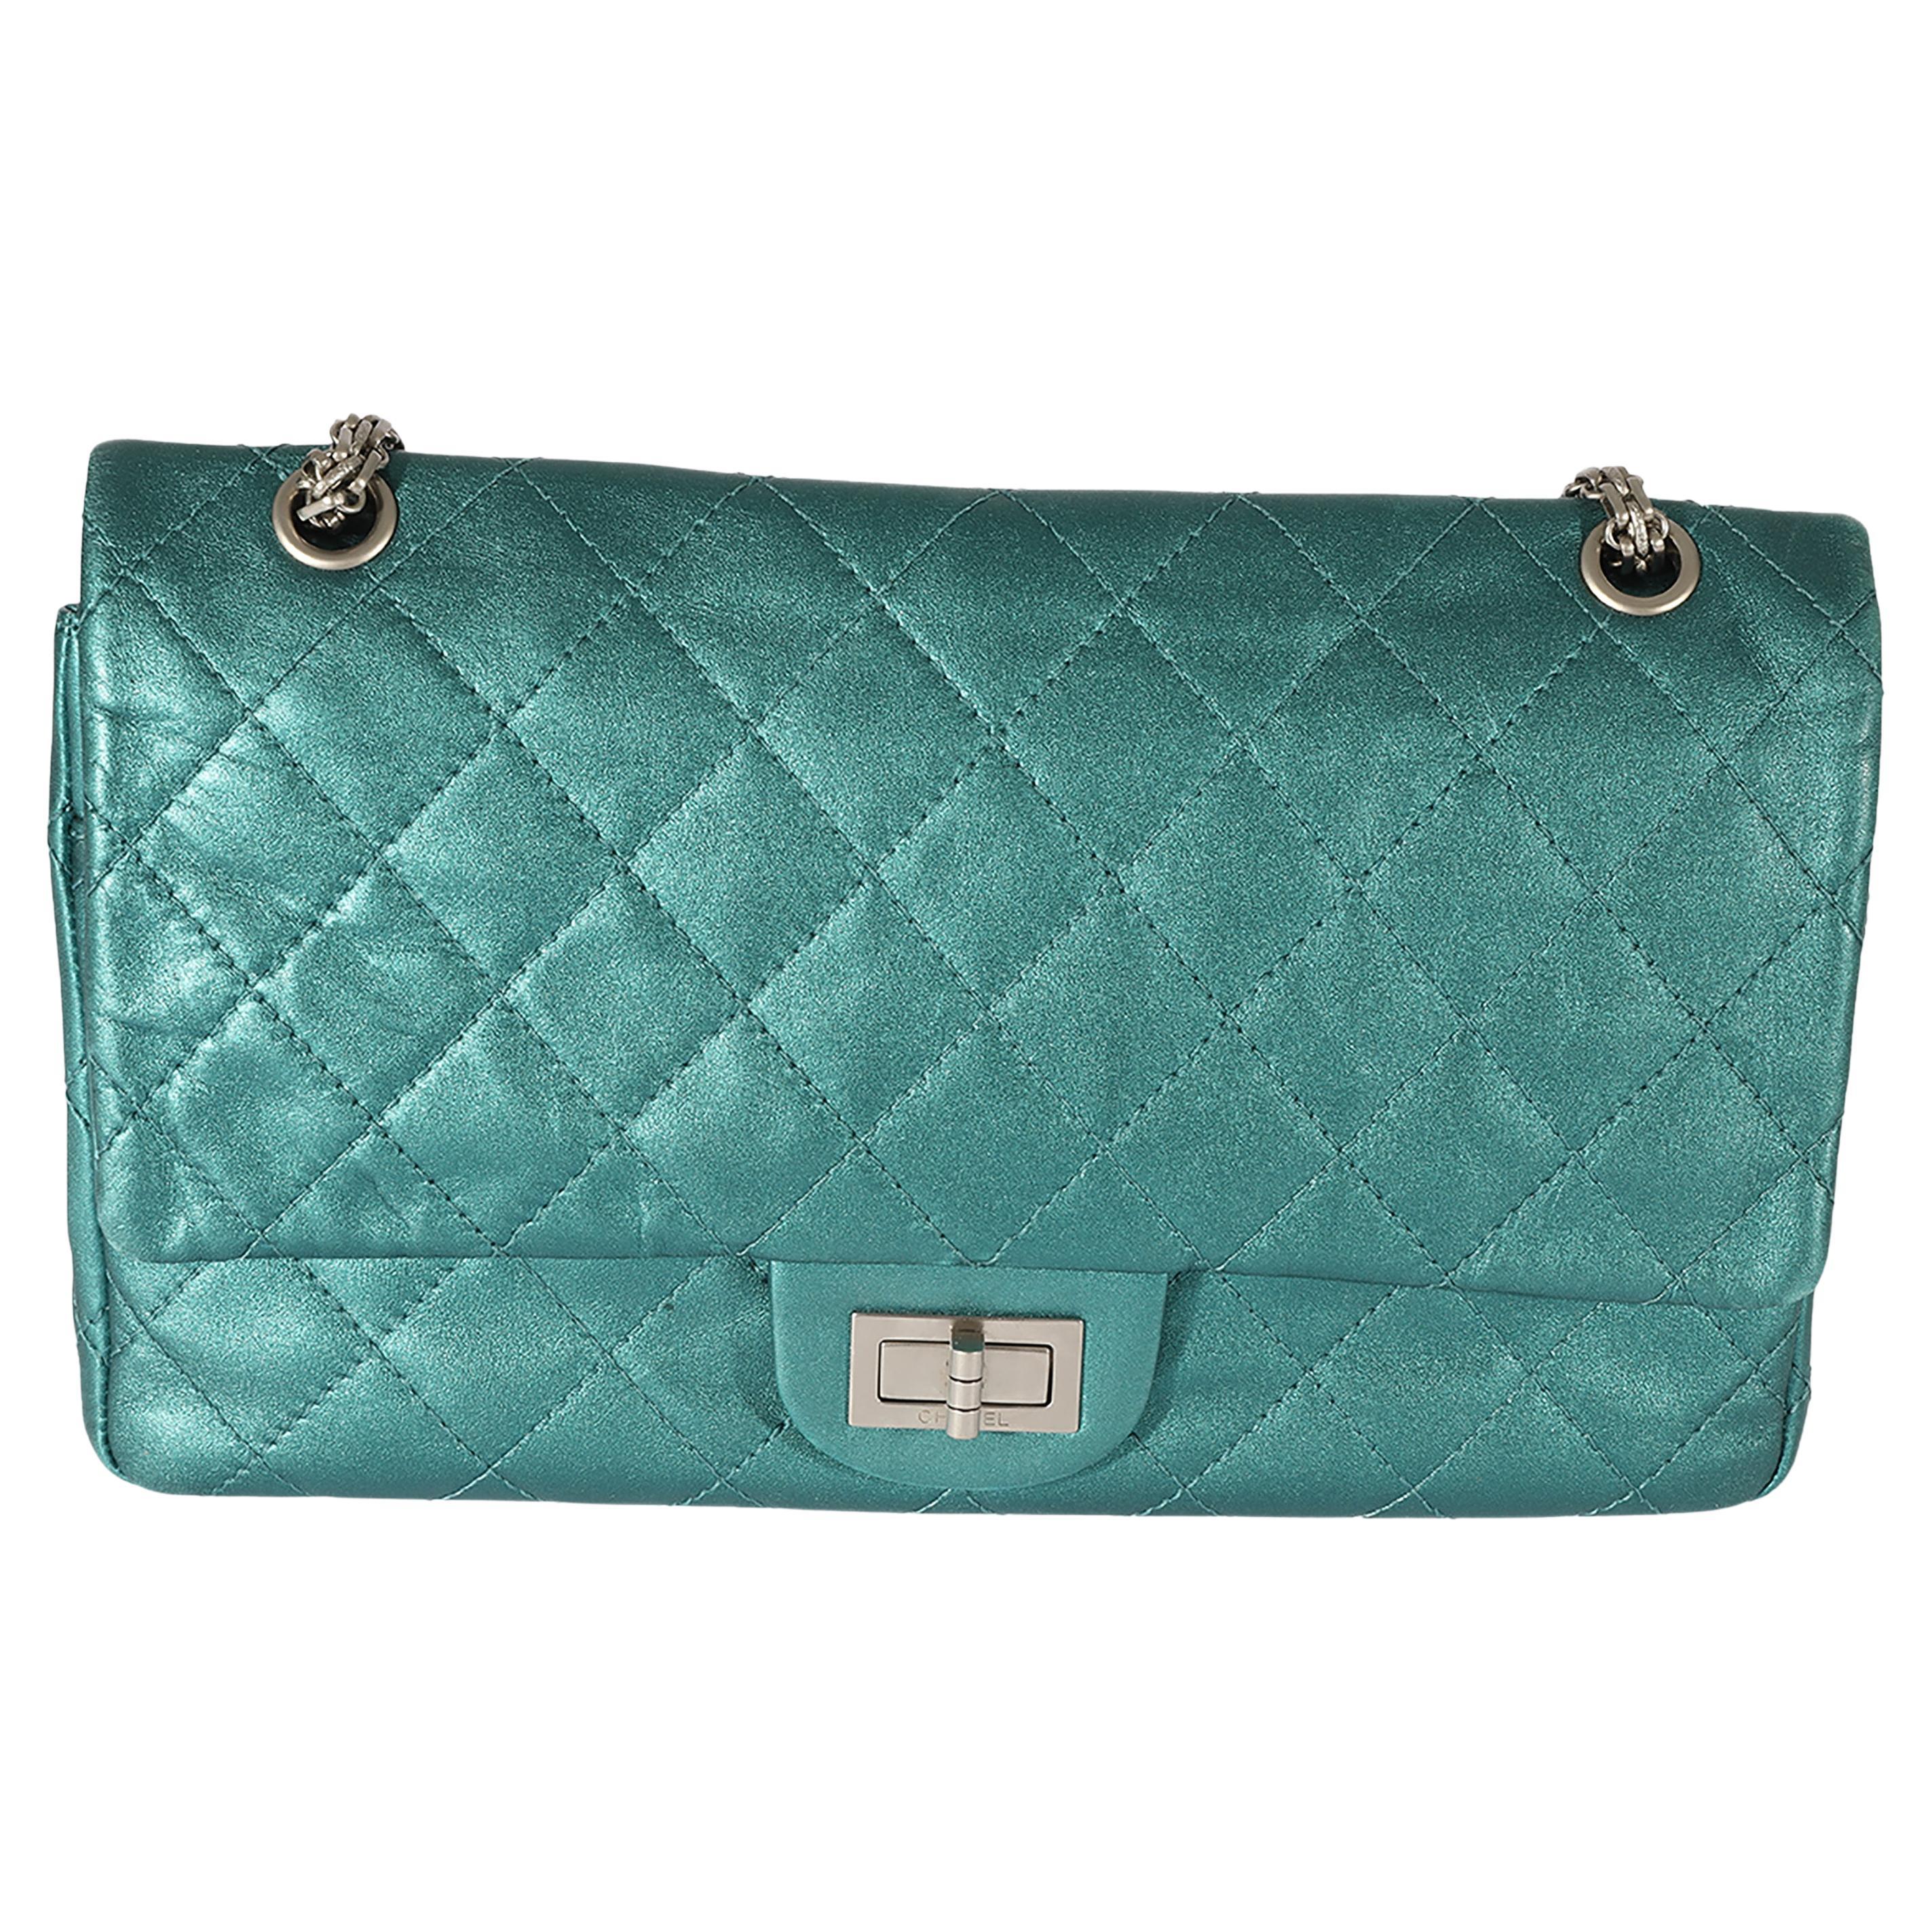 Chanel Green Metallic Leather 2.55 227 Reissue Flap Bag